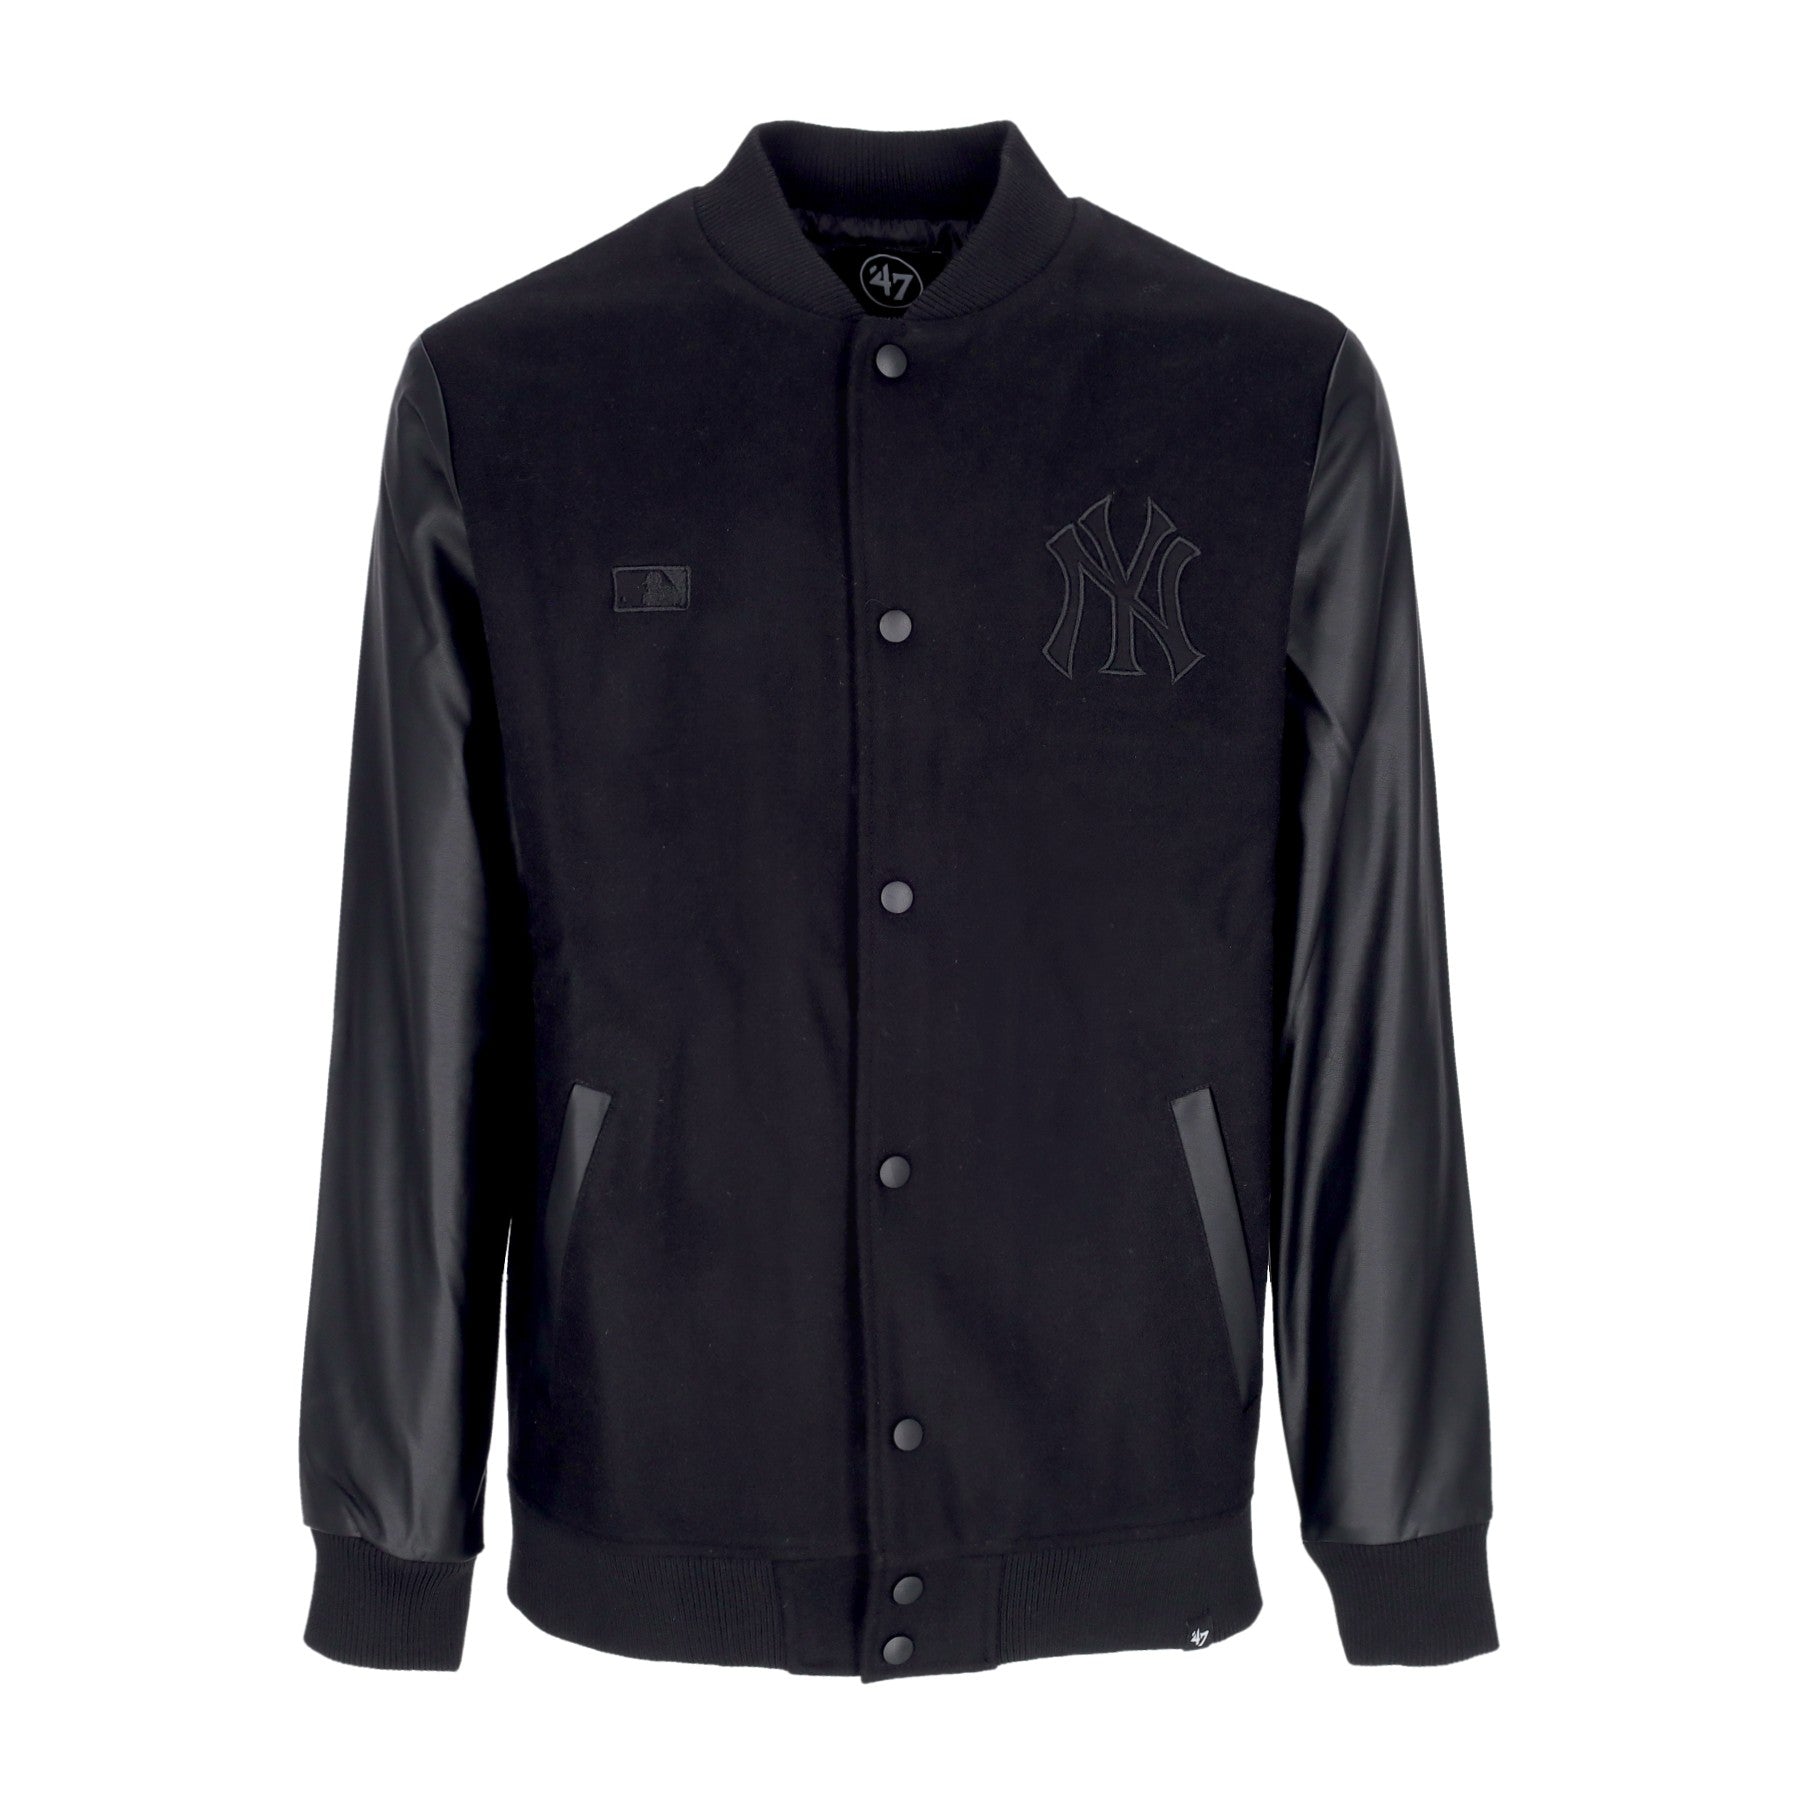 47 Brand, Giubbotto College Uomo Mlb Hoxton Jacket Neyyan, Jet Black